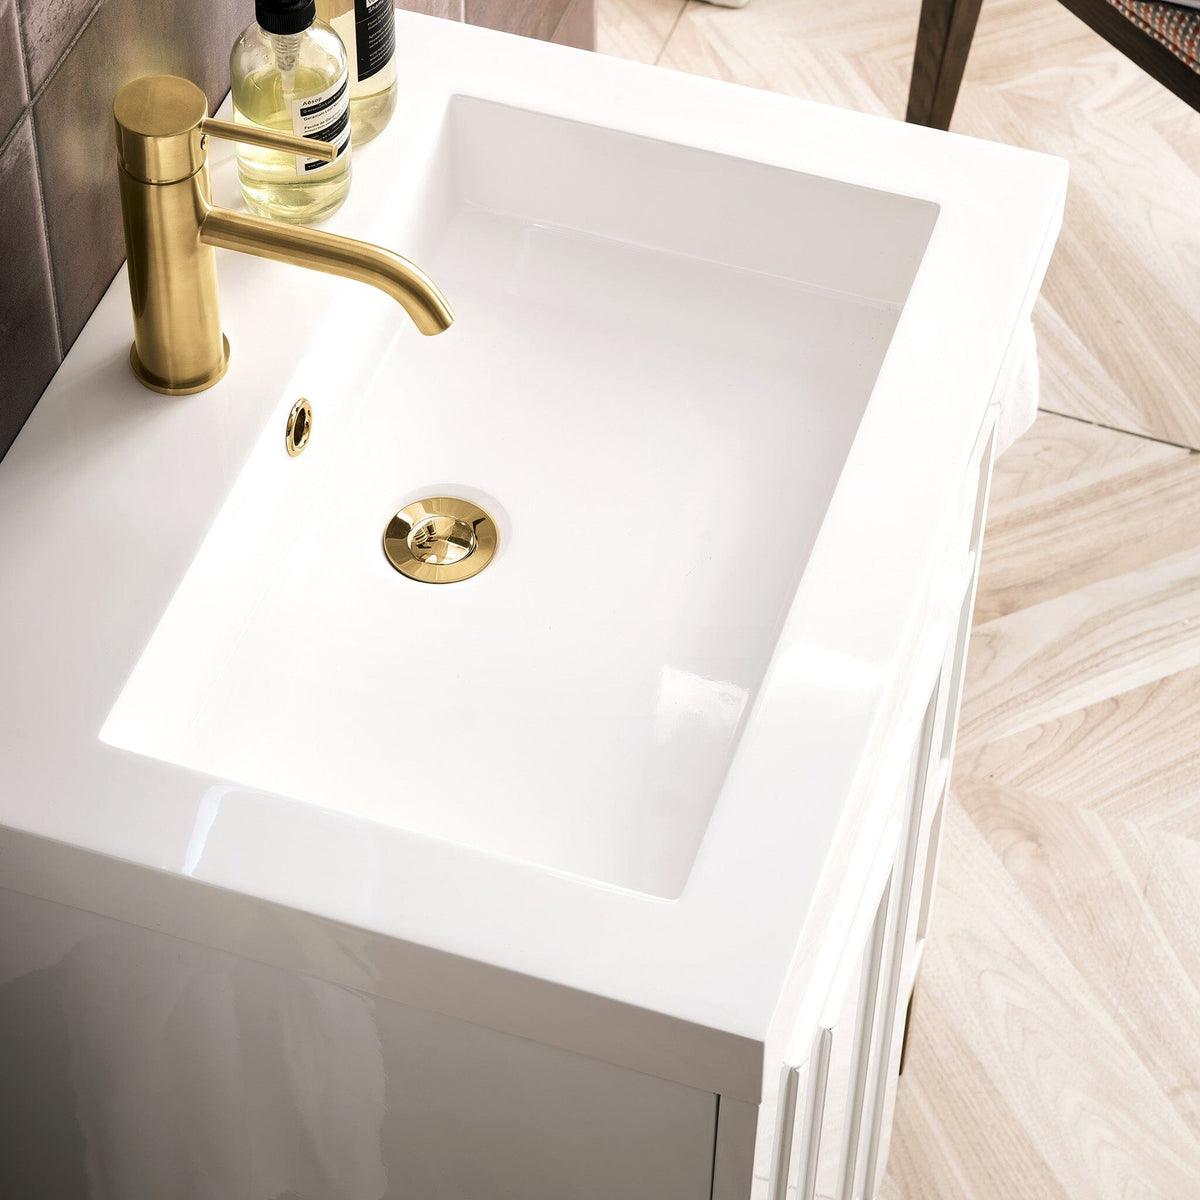 24" Alicante' Single Bathroom Vanity, Glossy White, Radiant Gold Base